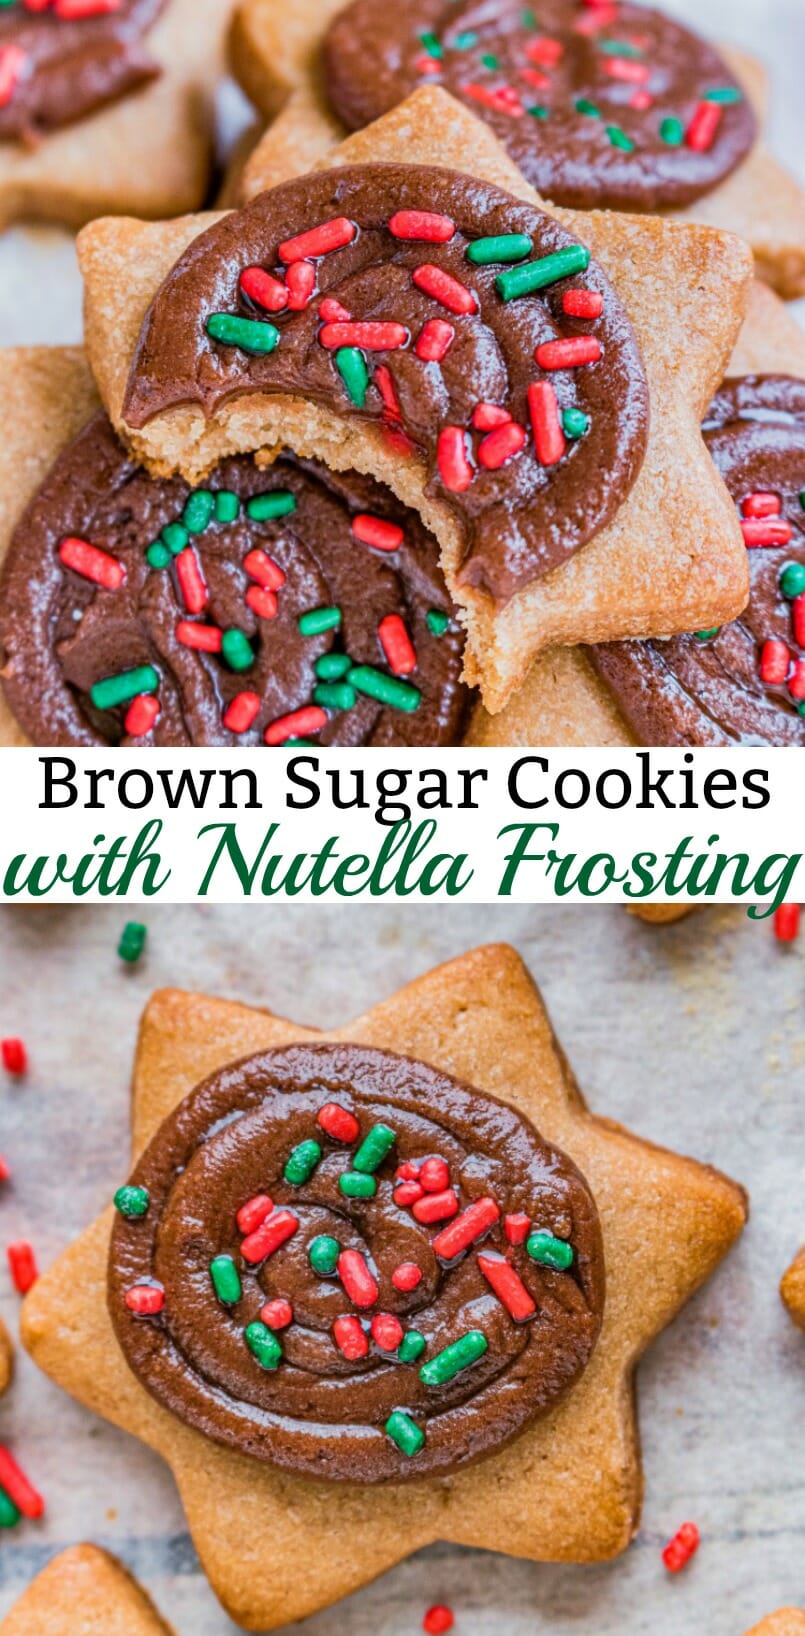 Brown Sugar Cookies with Nutella Frosting